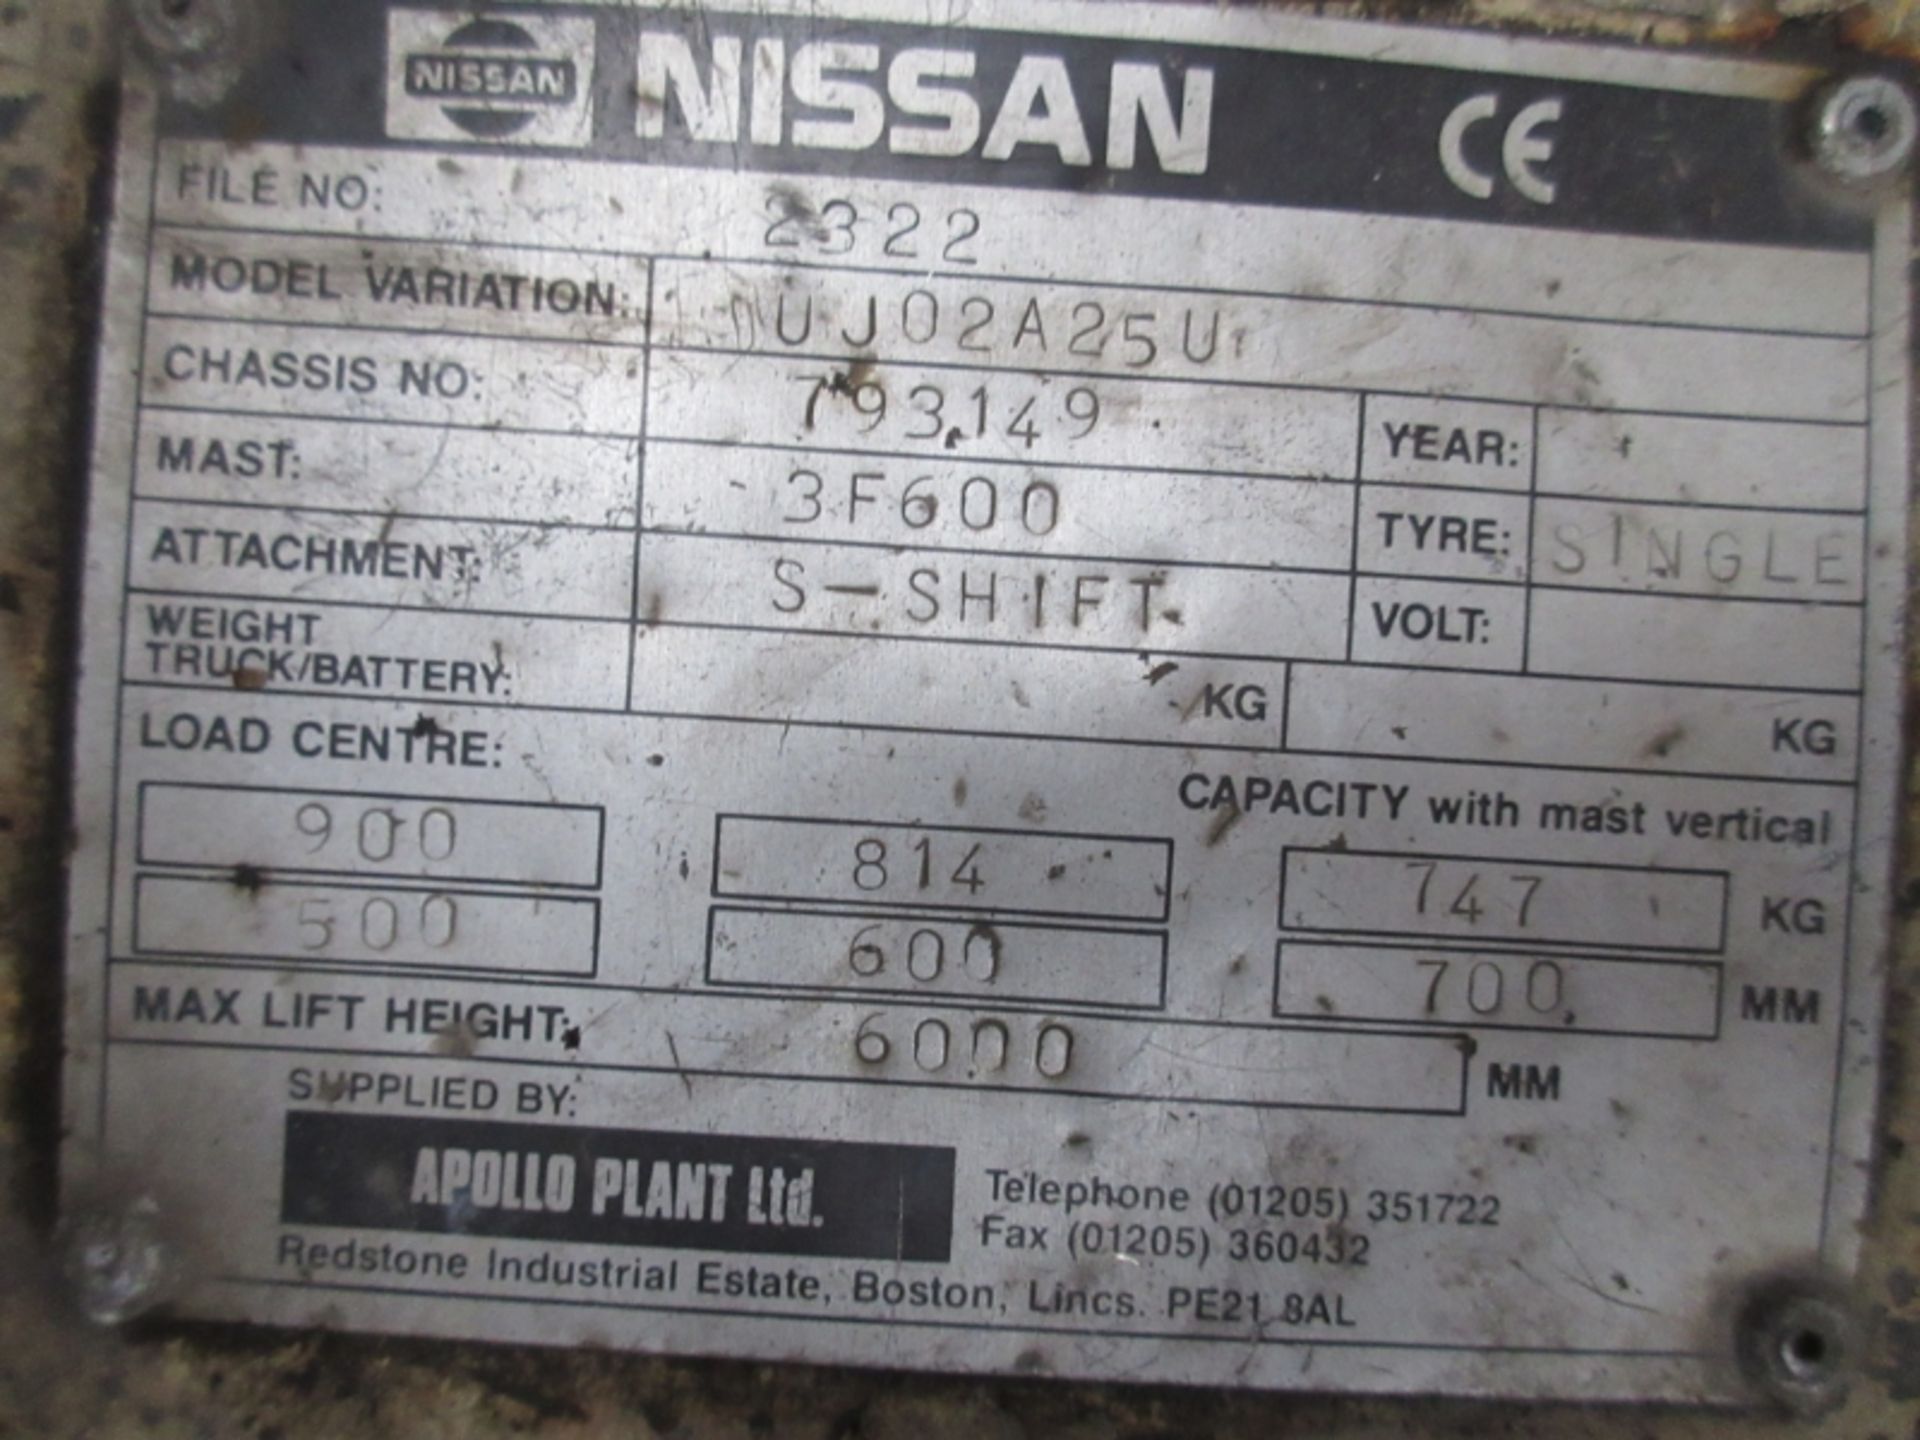 NISSAN UJ02A25U Plant LPG / CNG - VIN: 793149 - 8,920 Hours - Triplex 6M Forklift, Sideshift, R.D.L - Image 6 of 8